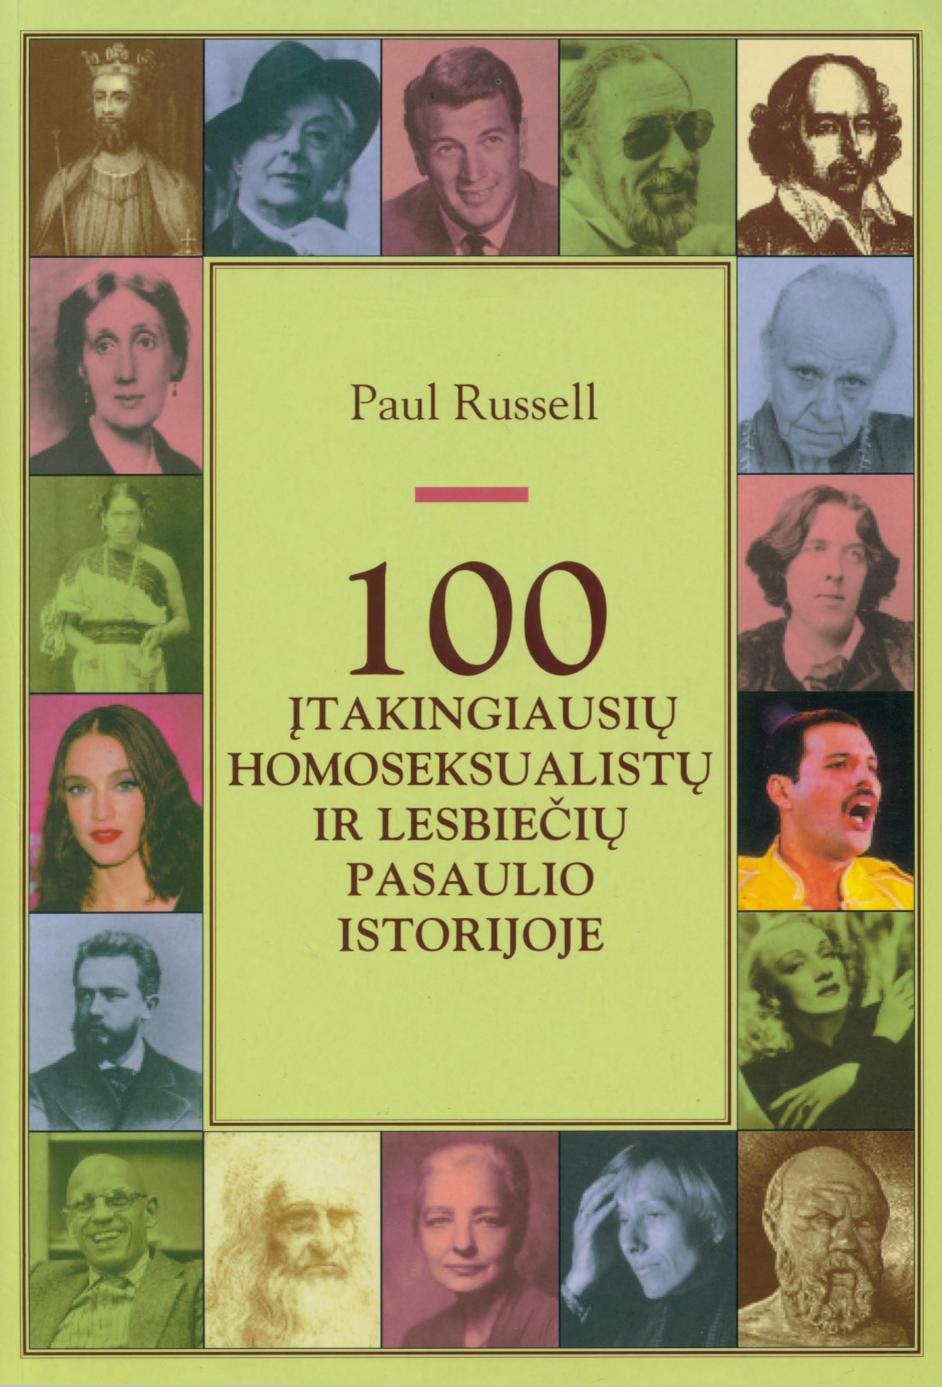 Paul.Russell.-.100.itakingiausiu.homoseksualistu.ir.lesbieciu.pasaulio.istorijoje.2001.LT